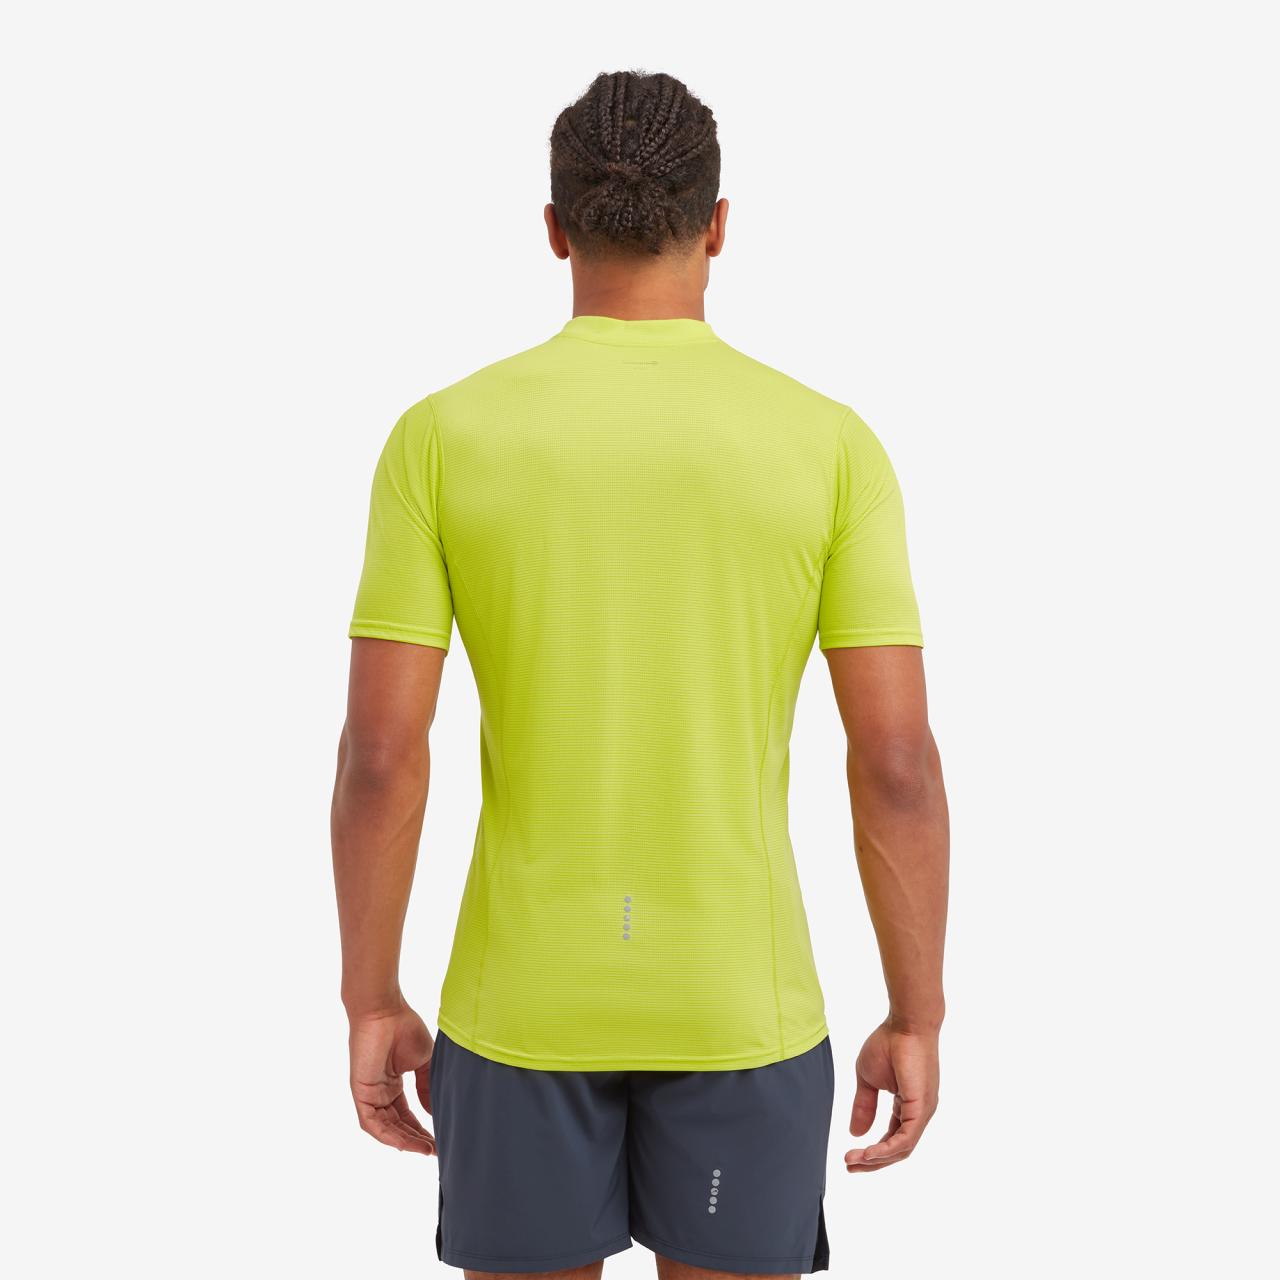 DART NANO ZIP T-SHIRT-CITRUS SPRING-XL pánské triko žlutozelené